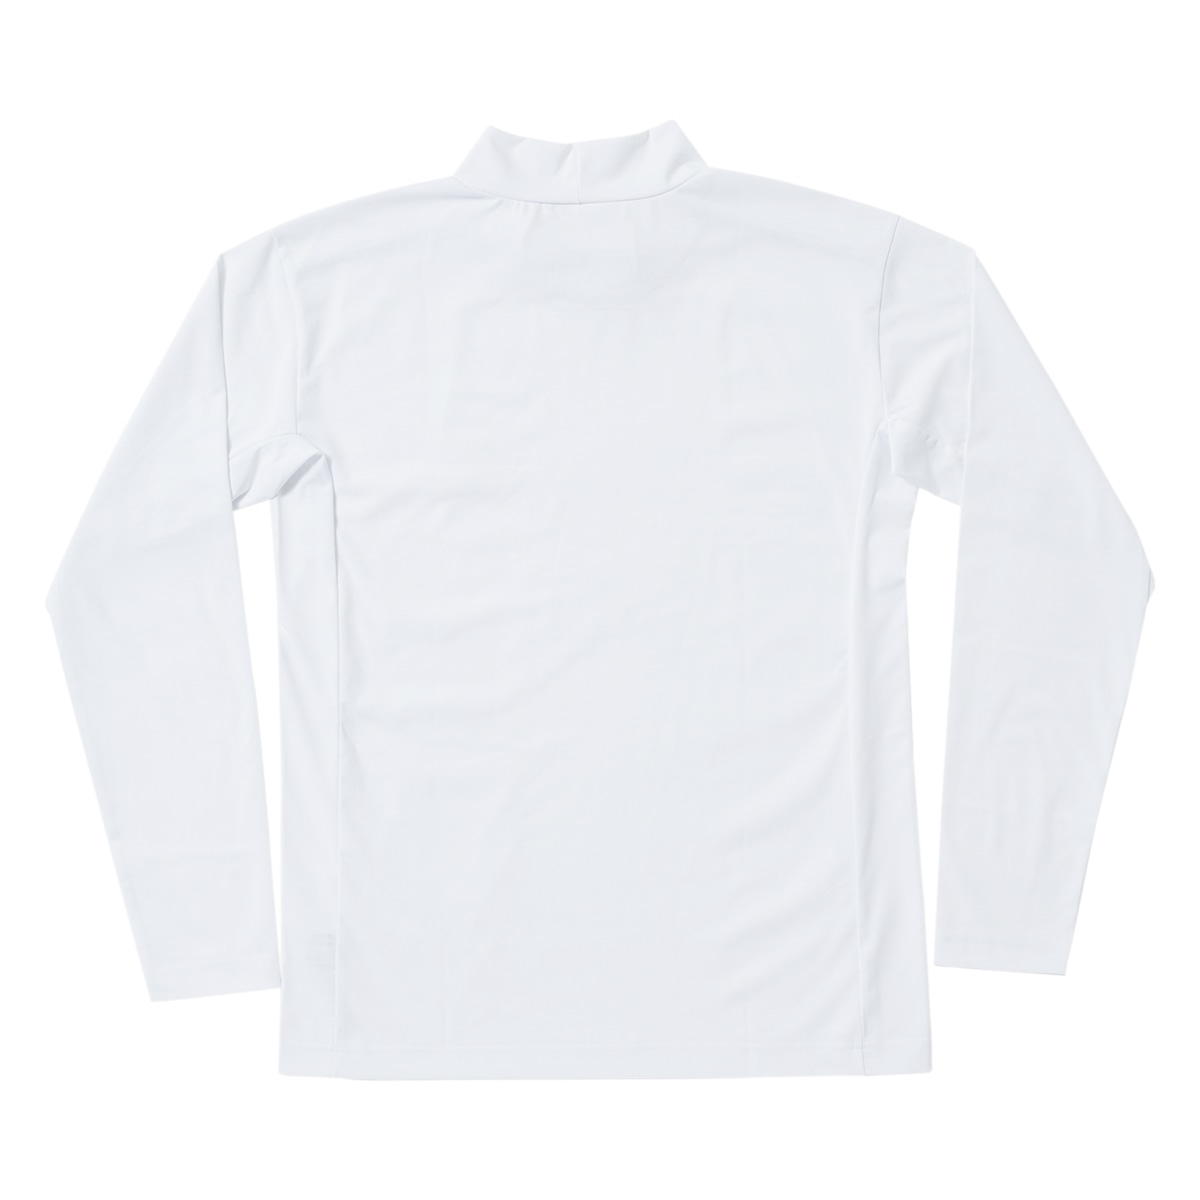 【add.03】PREMIUM MOCK NECK LS/TEE モックネックロングスリーブシャツ ユニセックス